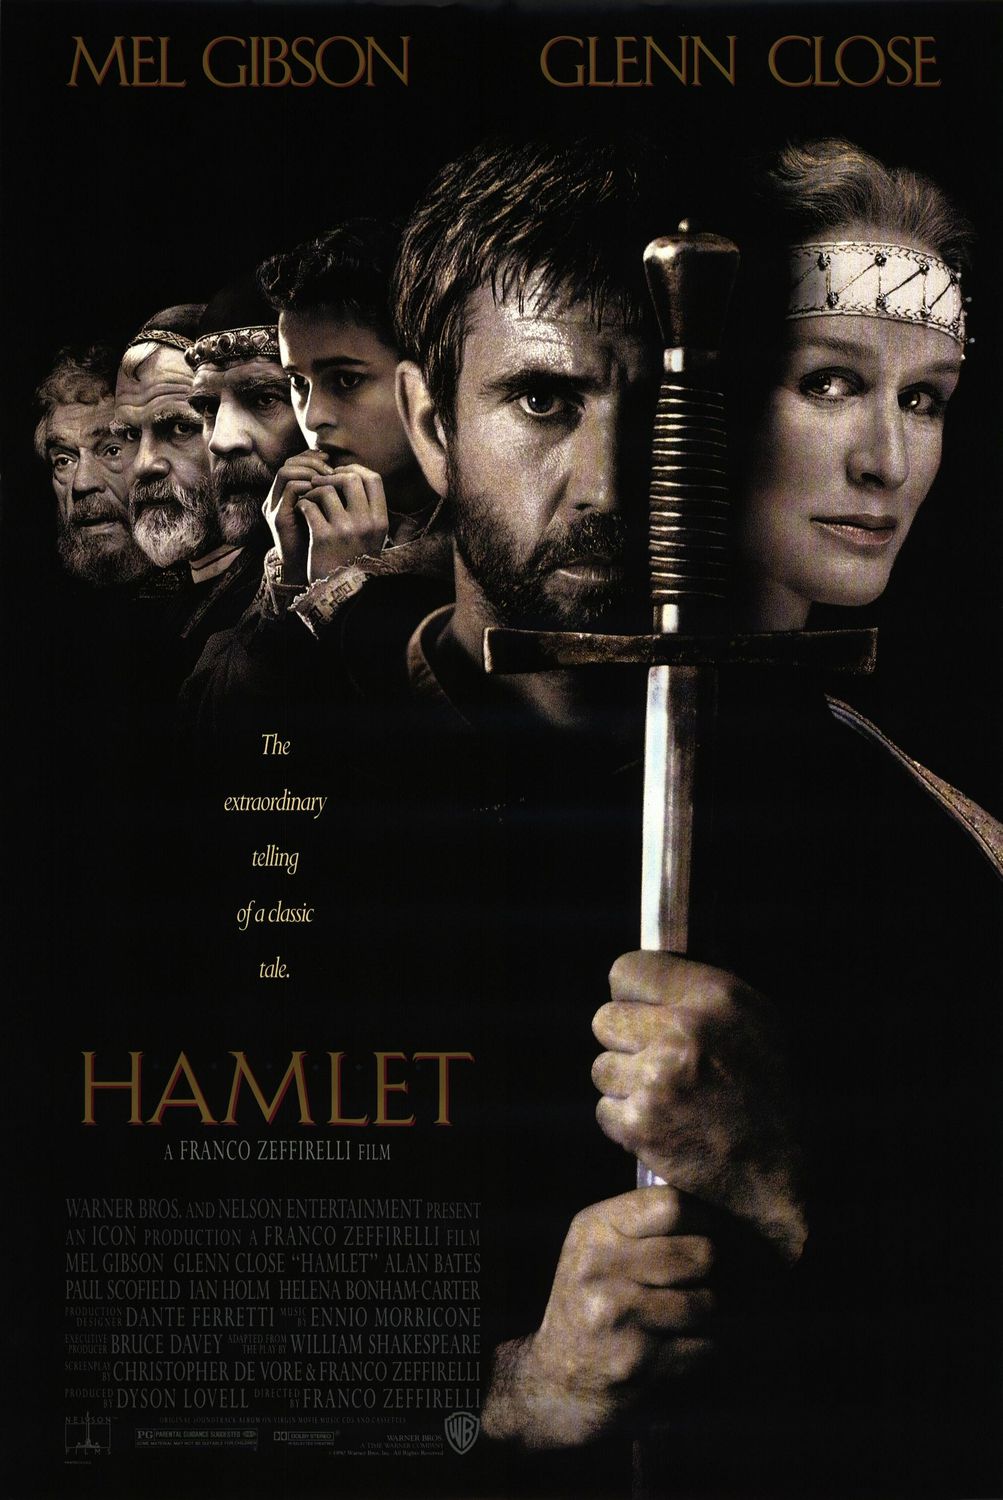 Постер - Гамлет: 1003x1500 / 179 Кб